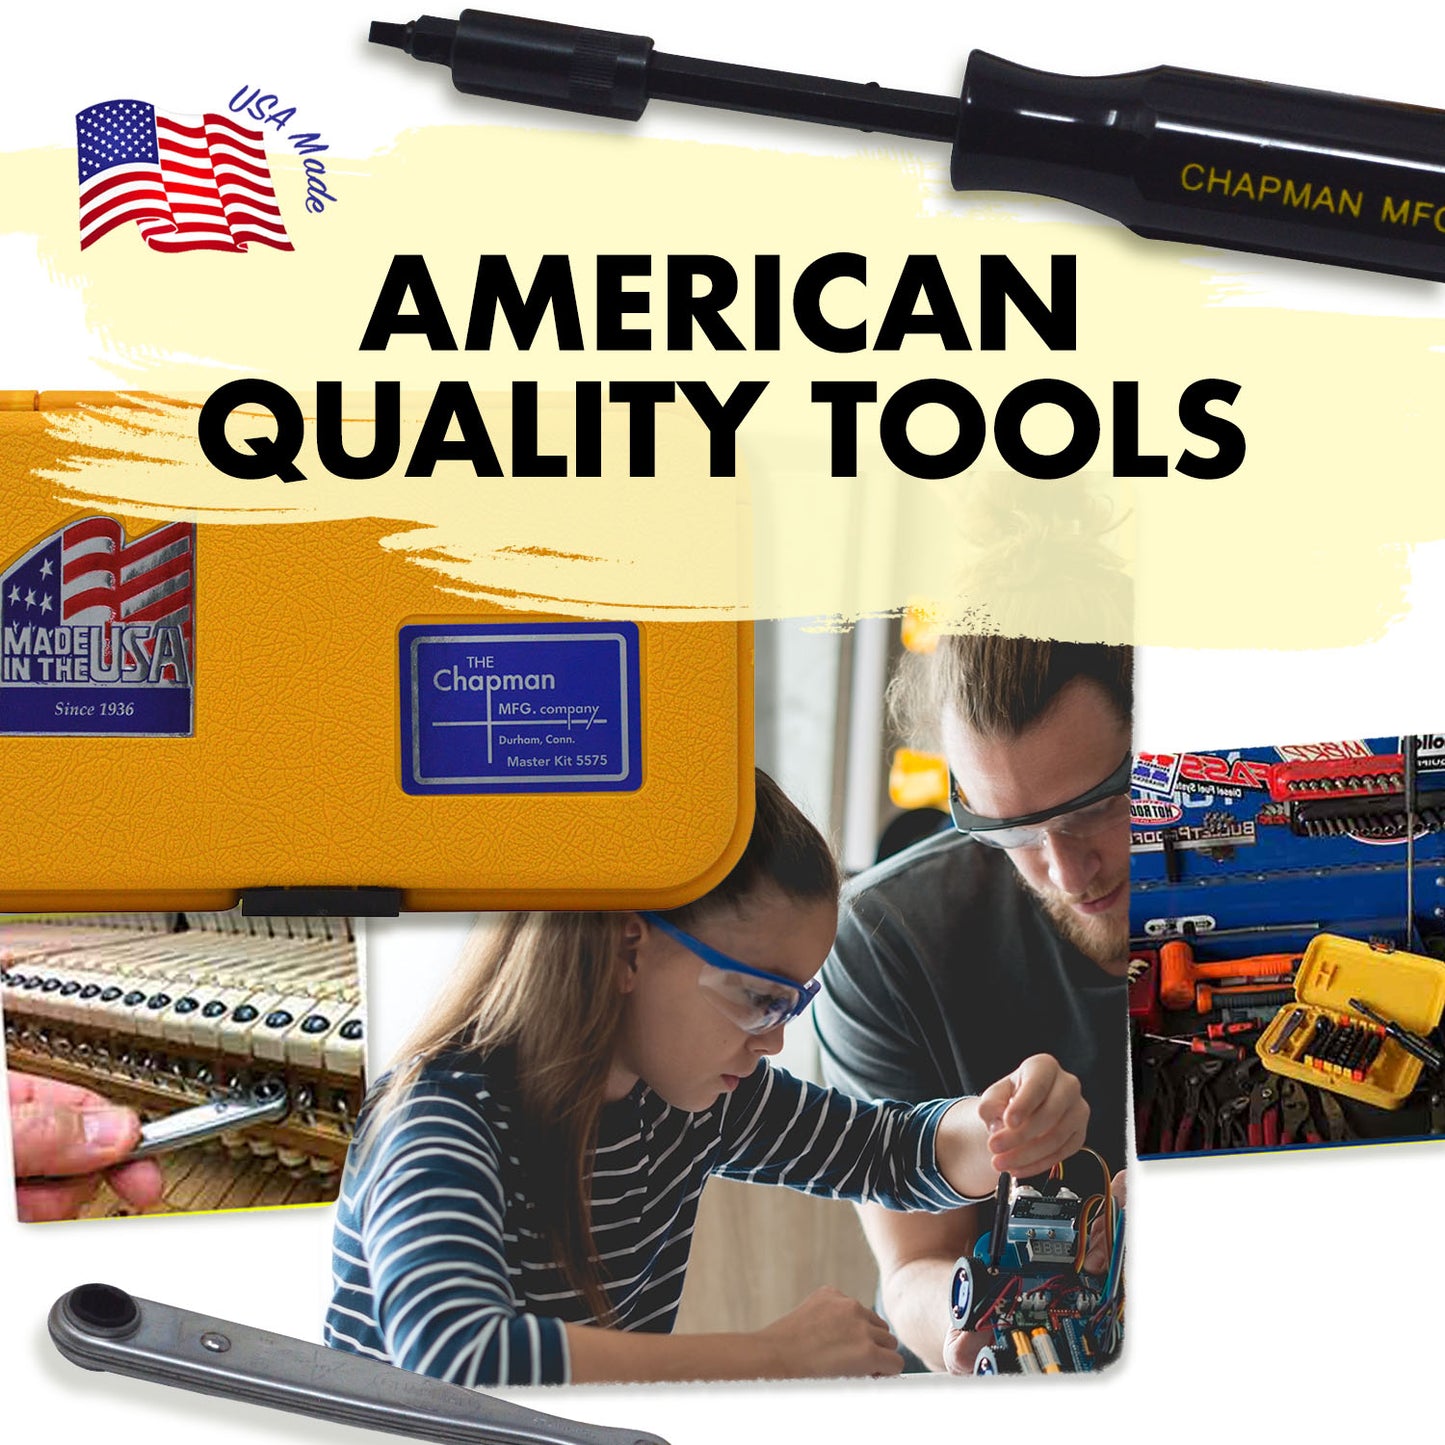 American Quality Tools  |  Chapman MFG